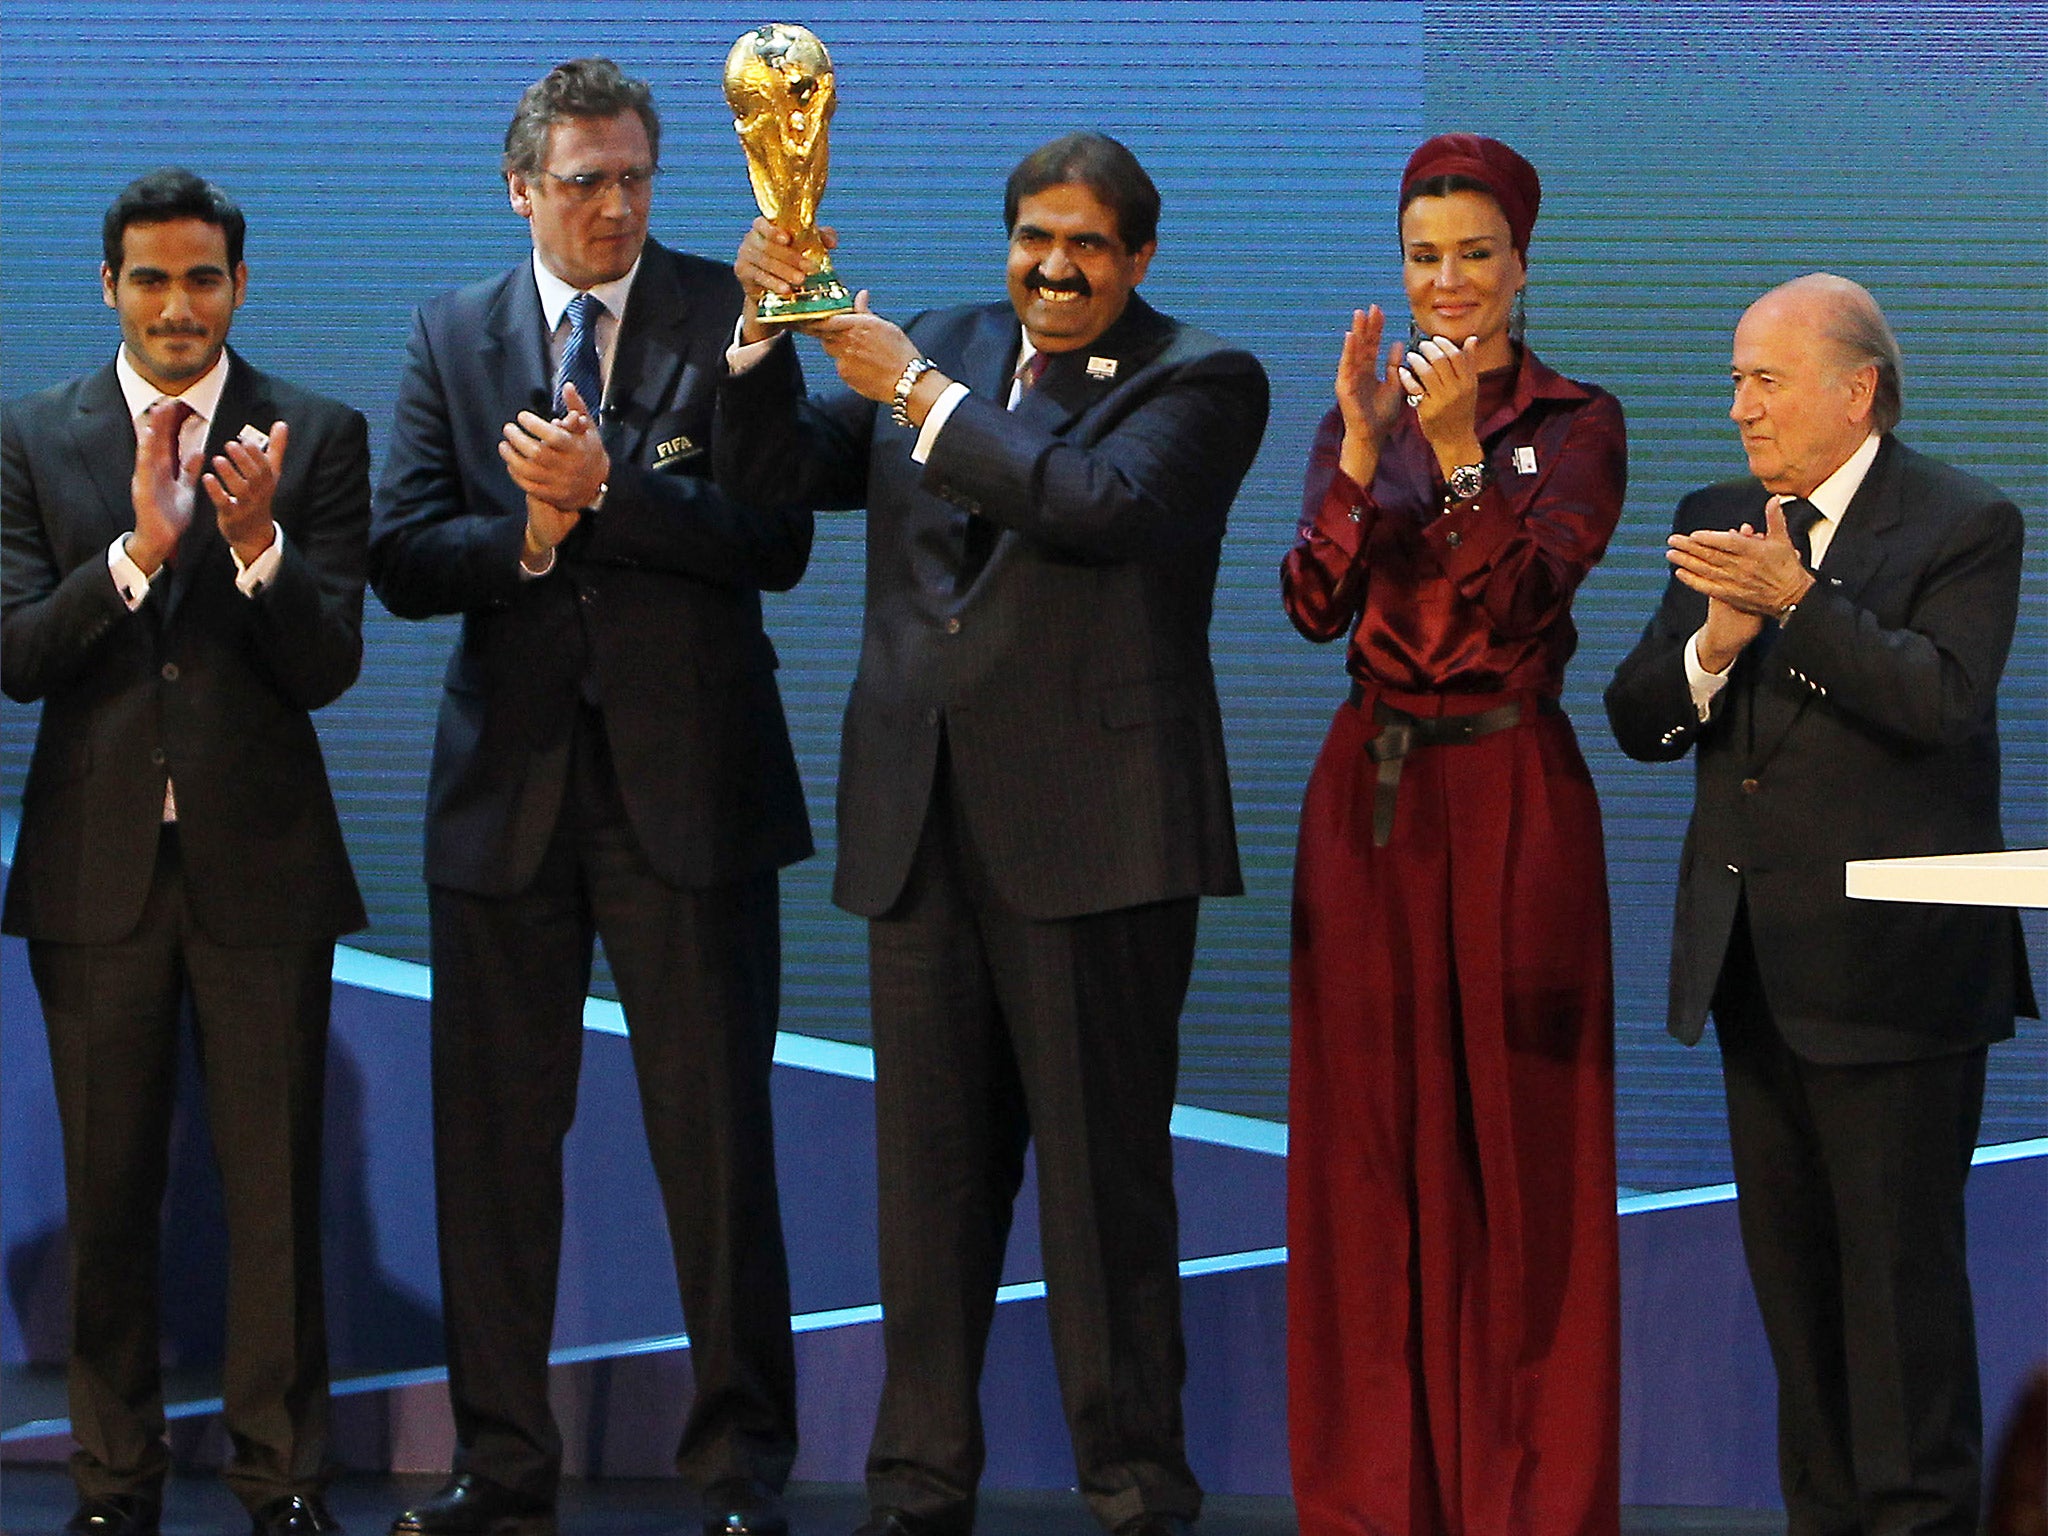 Qatar’s Emir Sheikh Hamad bin Khalifa al-Thani raises the World Cup after winning the vote